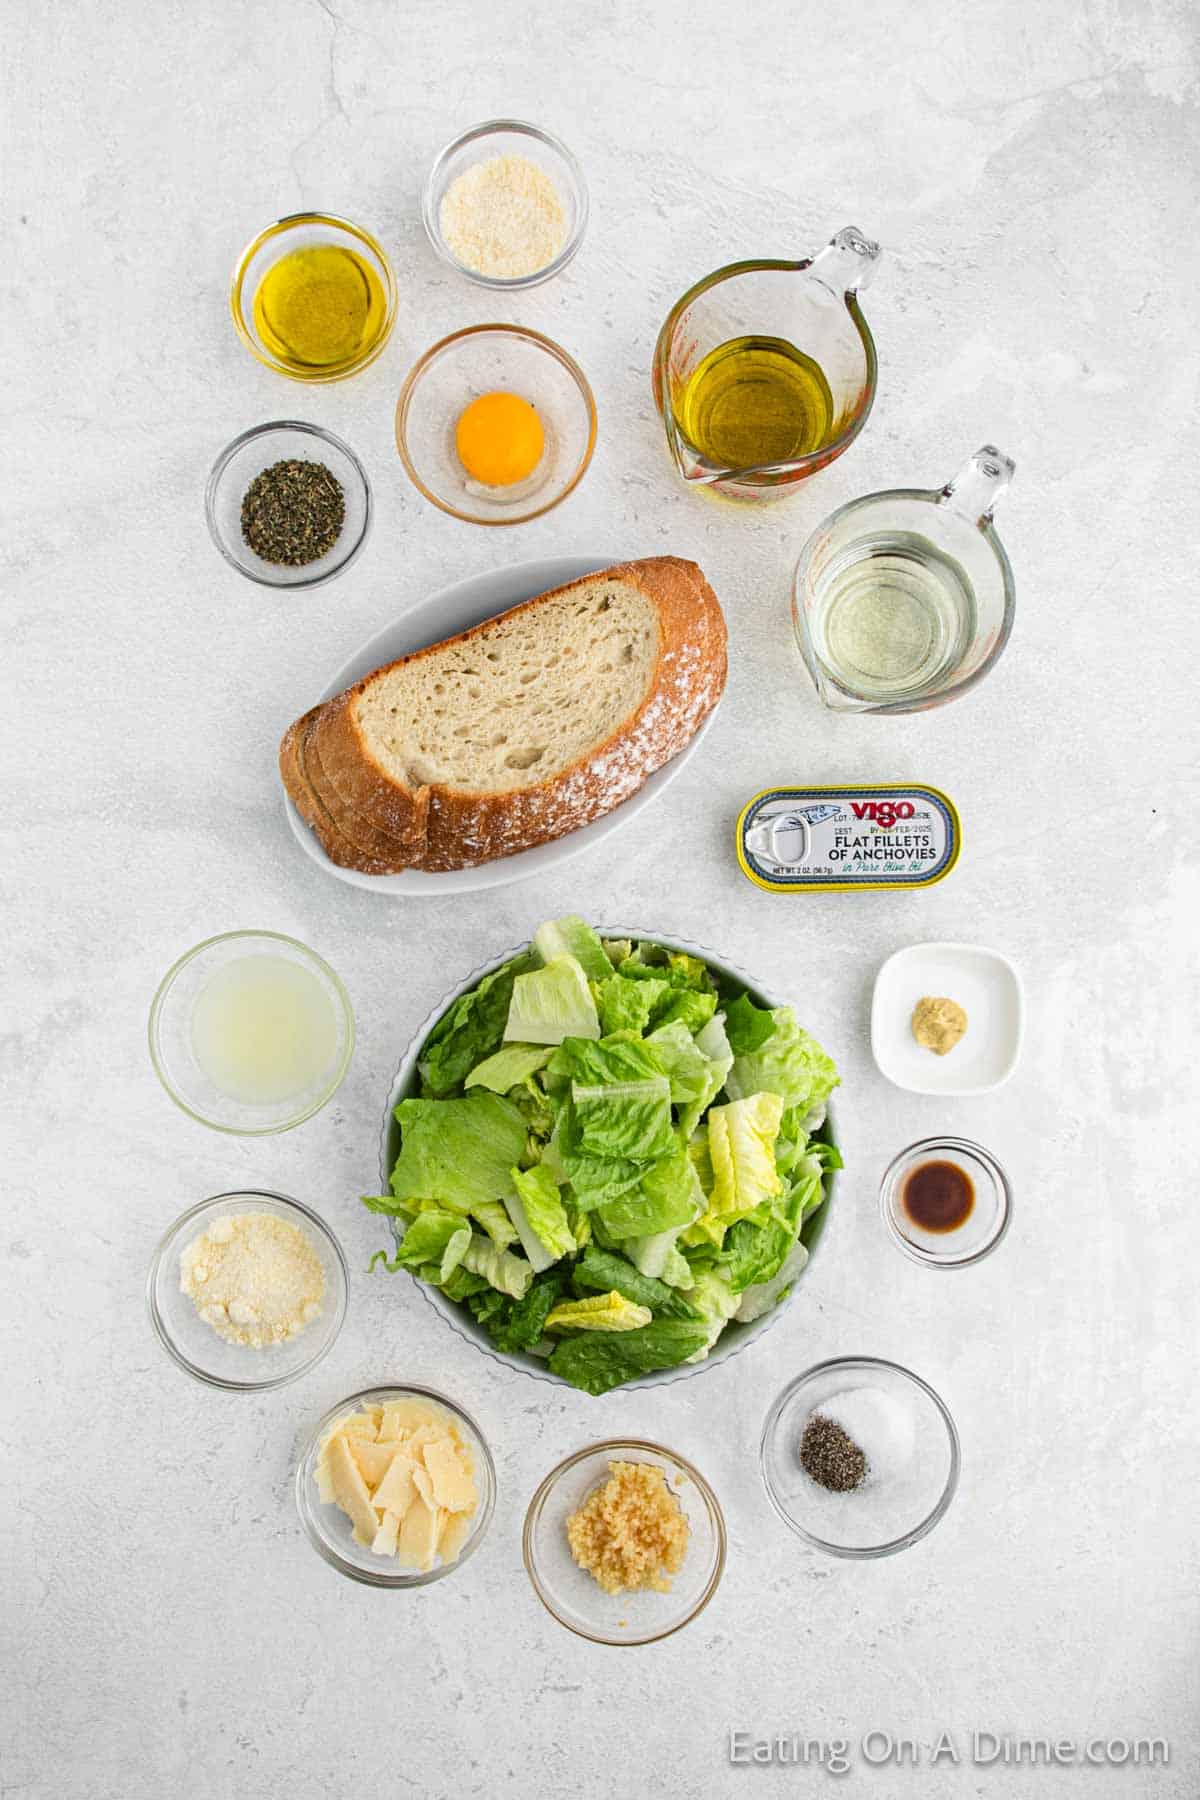 Ingredients - Bread Slices, olive oil, Italian Seasoning, Parmesan Cheese, anchovy filets, garlic, Worcestershire Sauce, egg, lemon, Dijon Mustard, olive oil, vegetable oil, parmesan cheese, salt, pepper